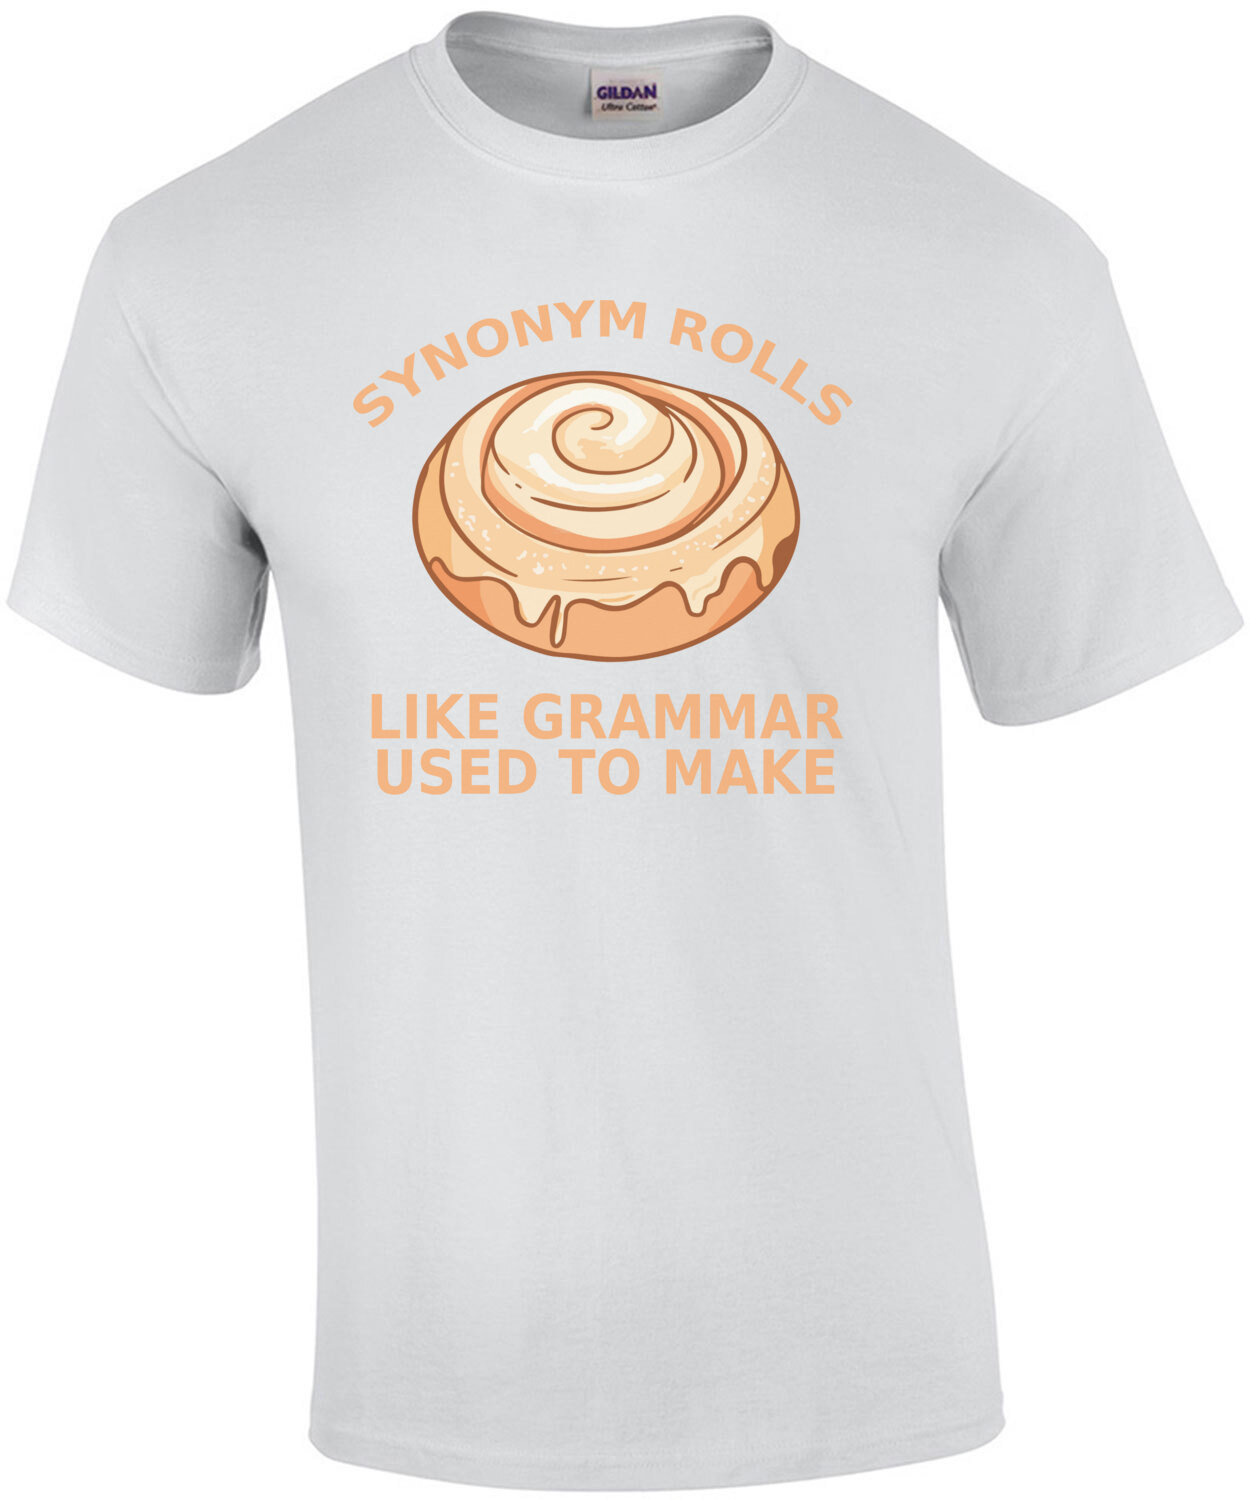 Synonym Rolls - Like Grammar Used To Make - Funny Food Pun T-Shirt